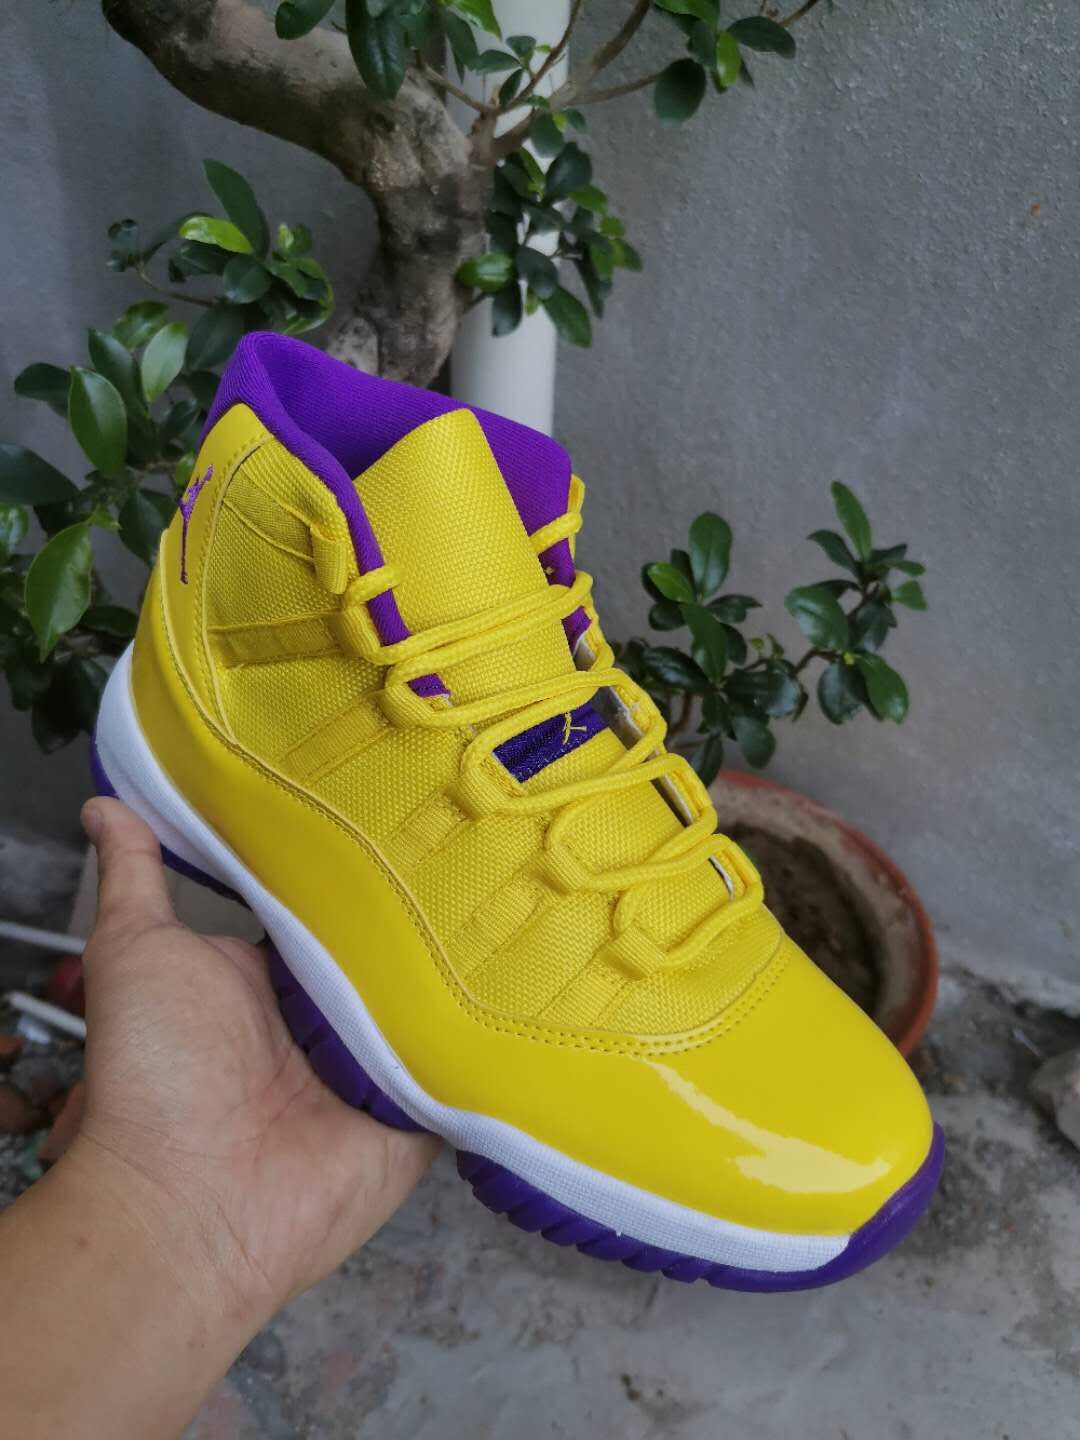 jordan 11 purple and yellow